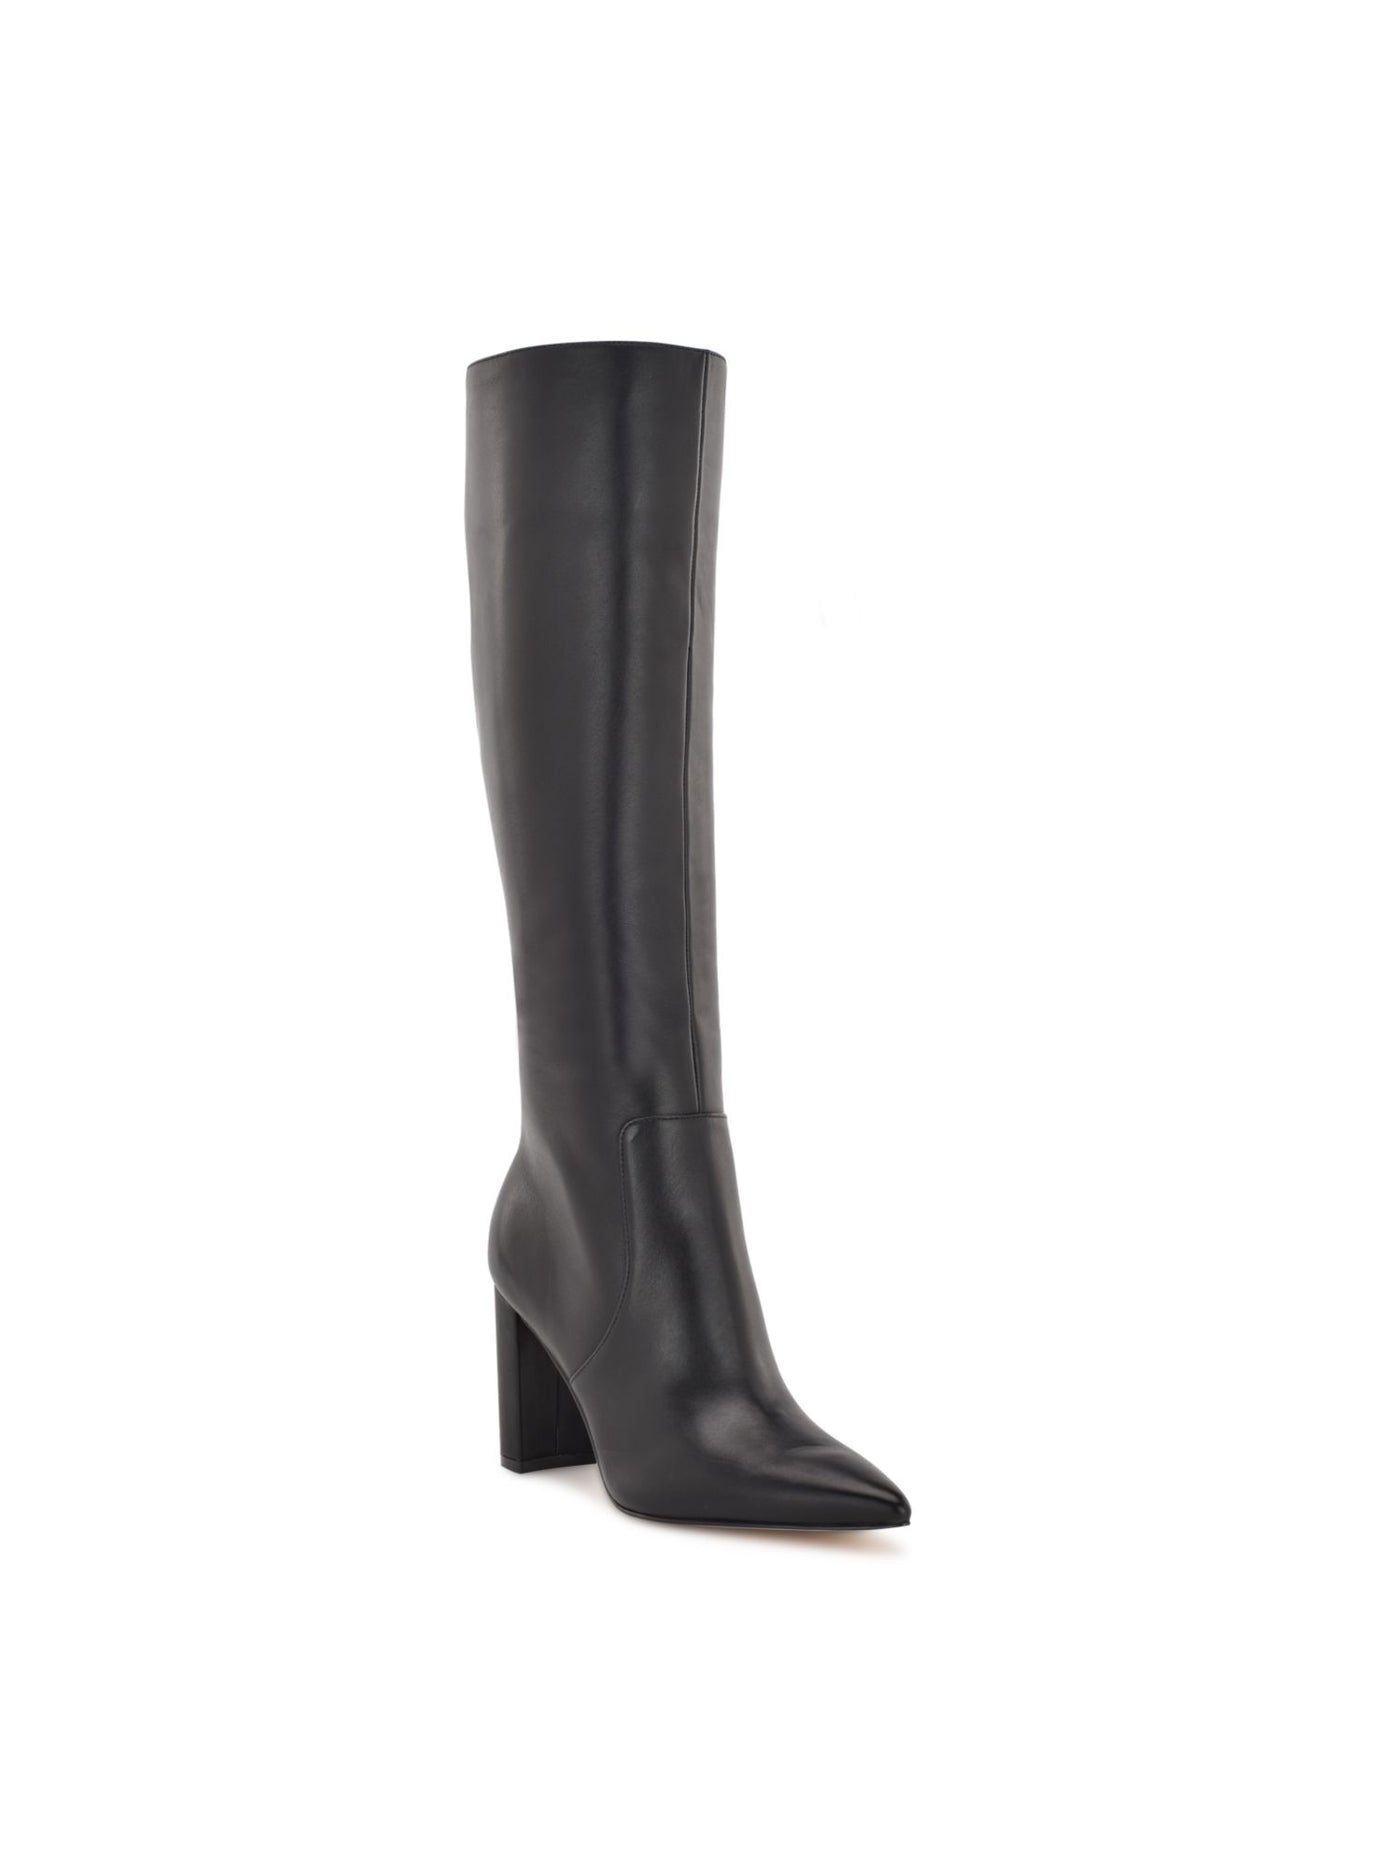 NINE WEST Womens Black Goring Padded Danee Pointed Toe Block Heel Zip-Up Leather Dress Boots 8 M